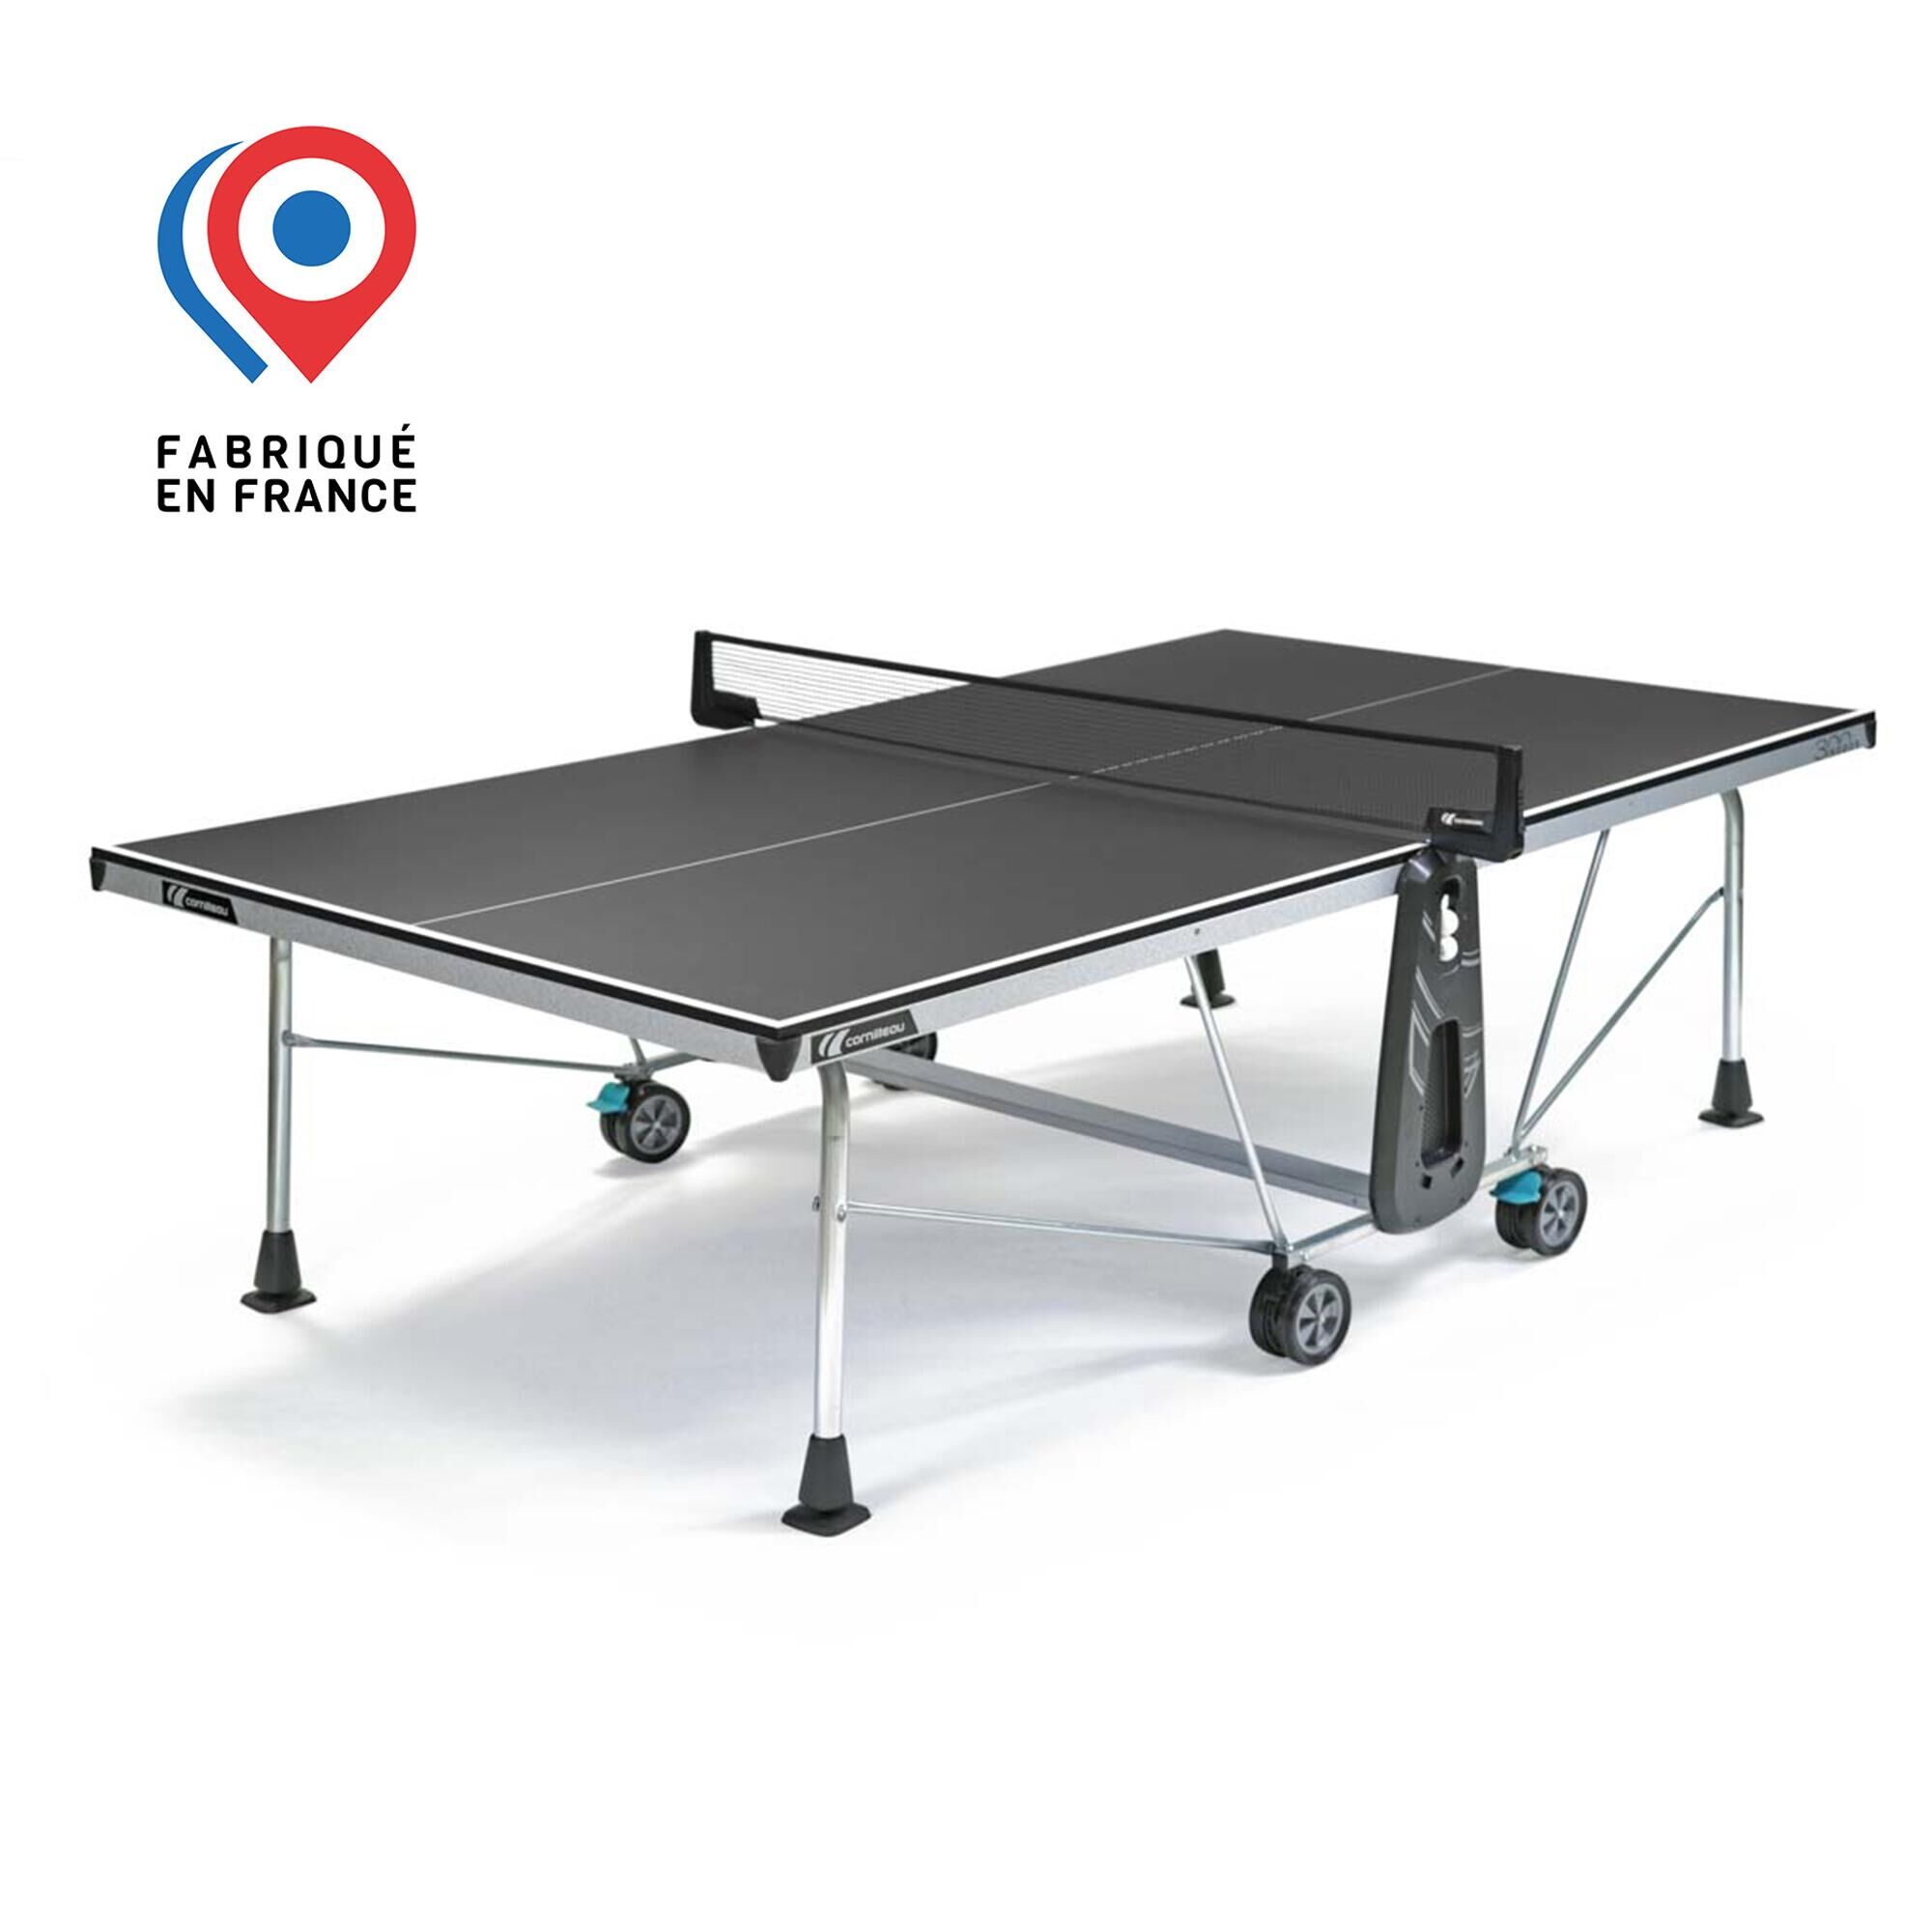 CORNILLEAU NEW 300 Indoor Table Tennis Table - Grey